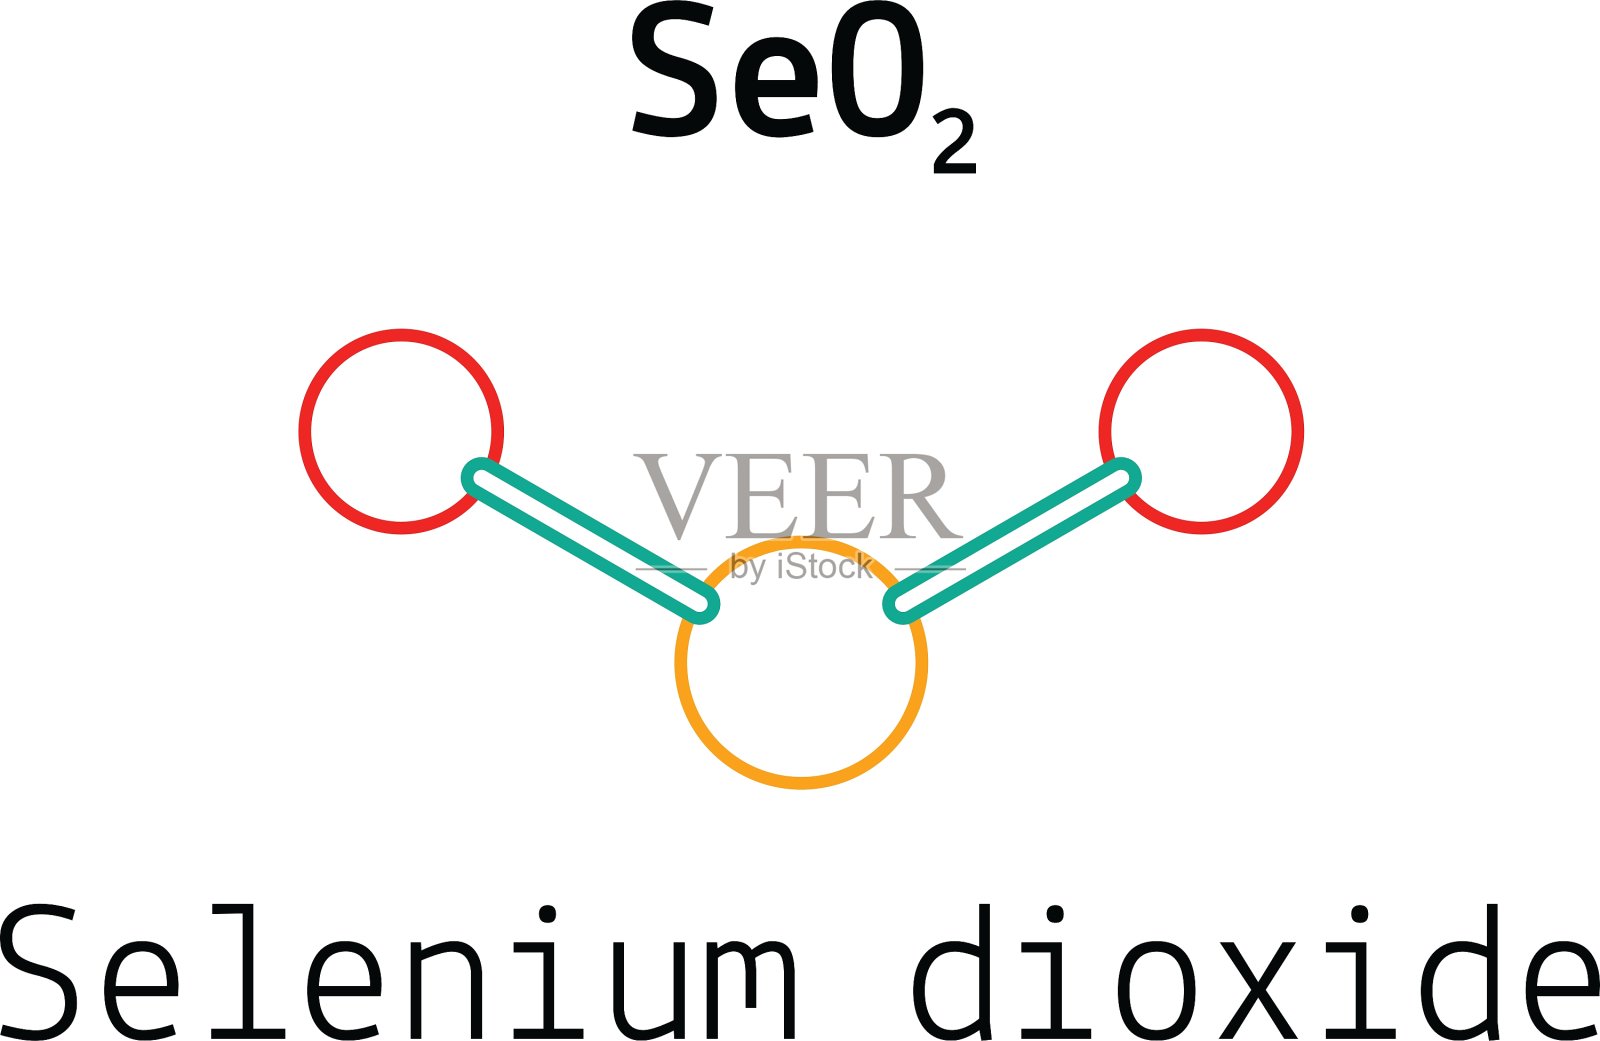 SeO2二氧化硒分子插画图片素材